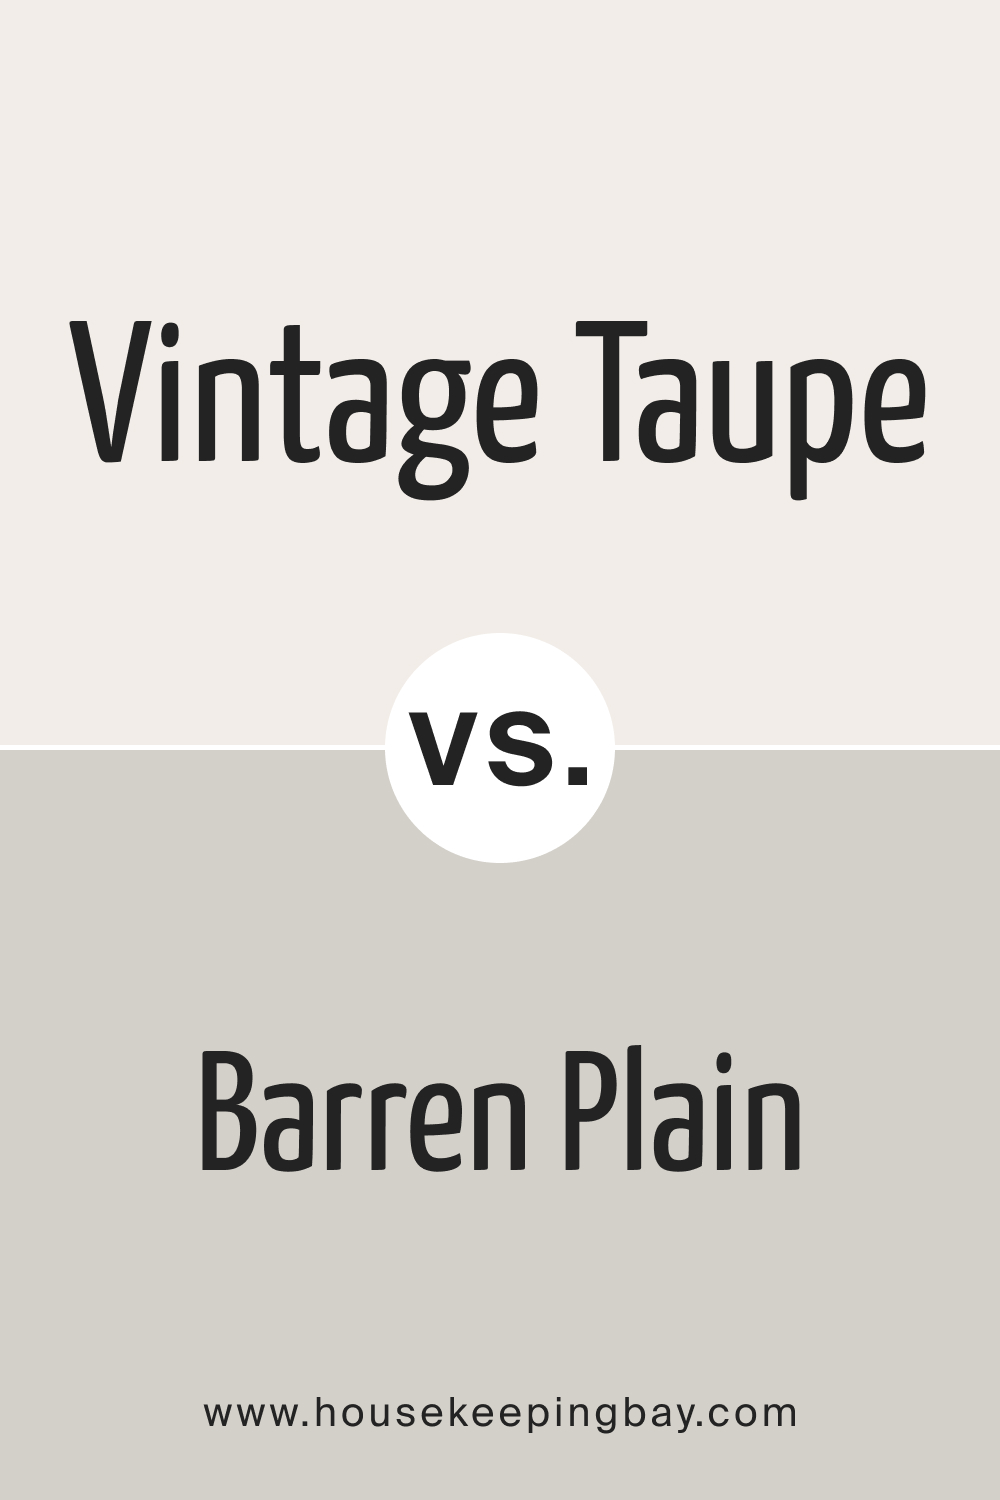 Vintage Taupe 2110 70 vs. BM Barren Plain 2111 60